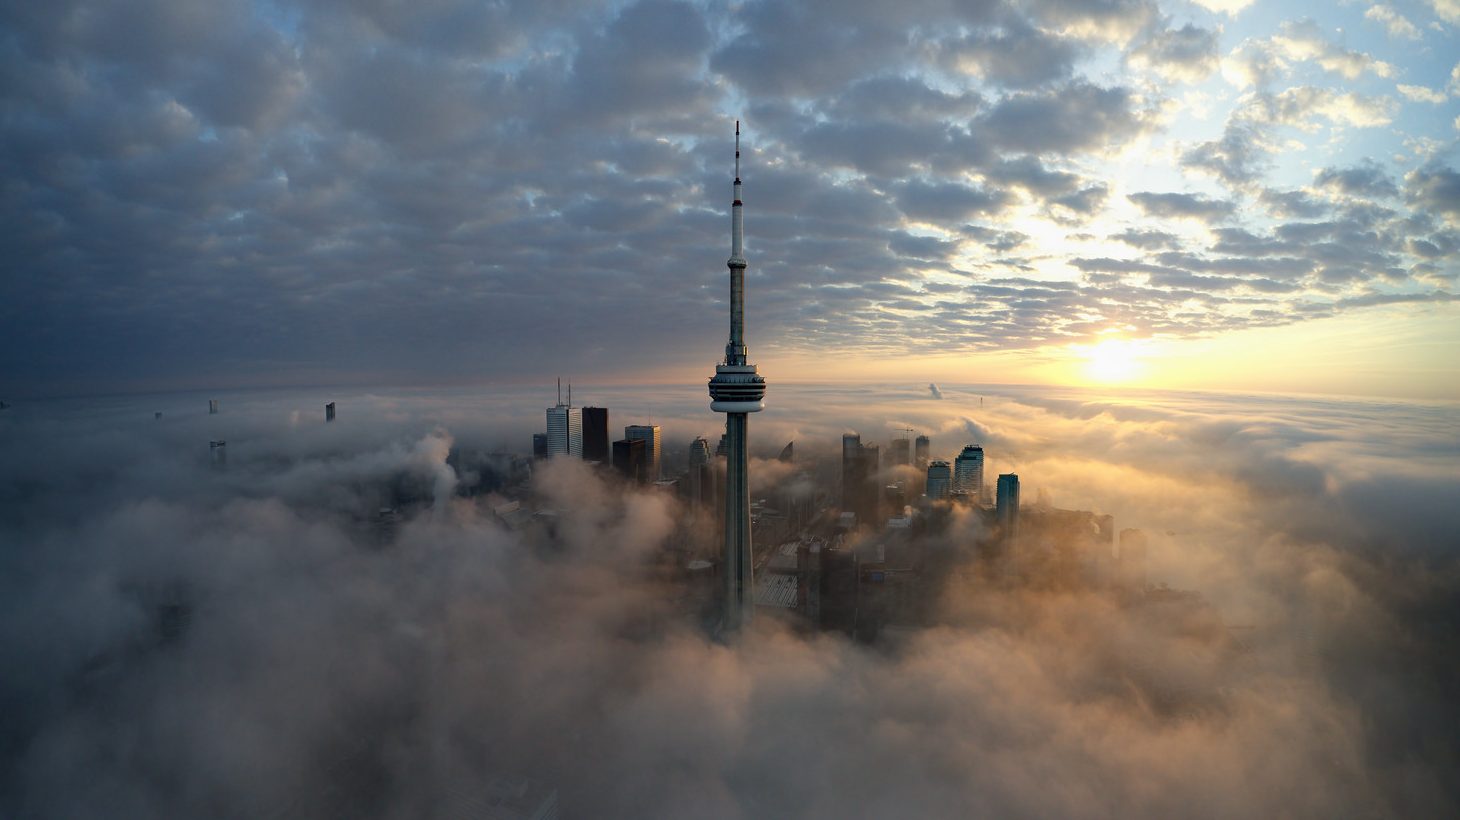 Fog advisory lifts for Toronto, GTA